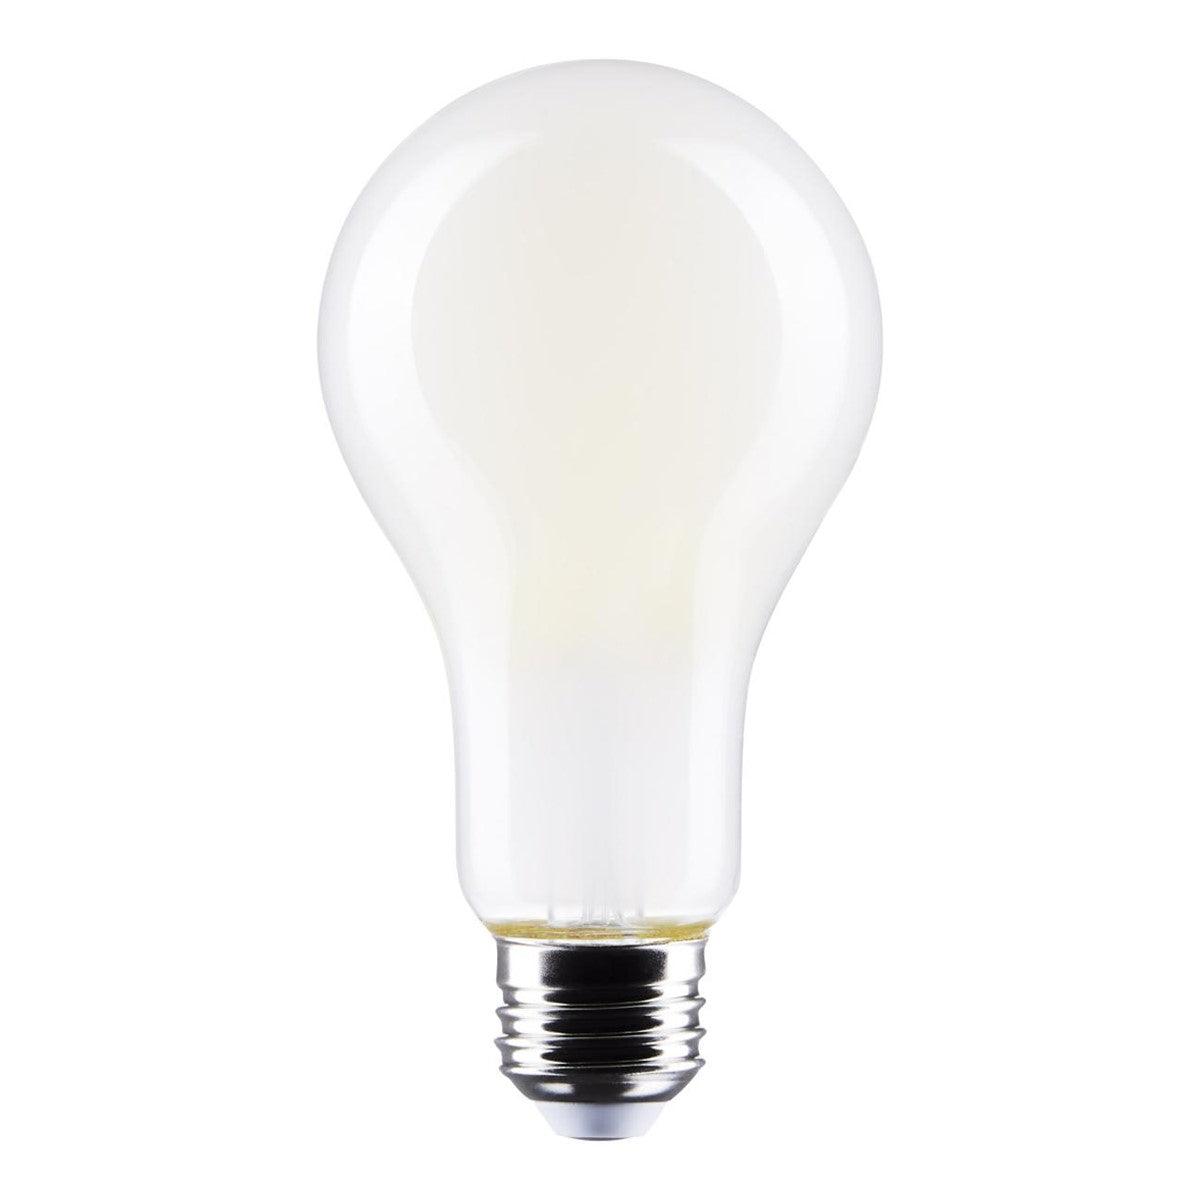 A21 LED Bulb, 17 Watt, 2000 Lumens, 5000K, E26 Medium Base, Frosted Finish